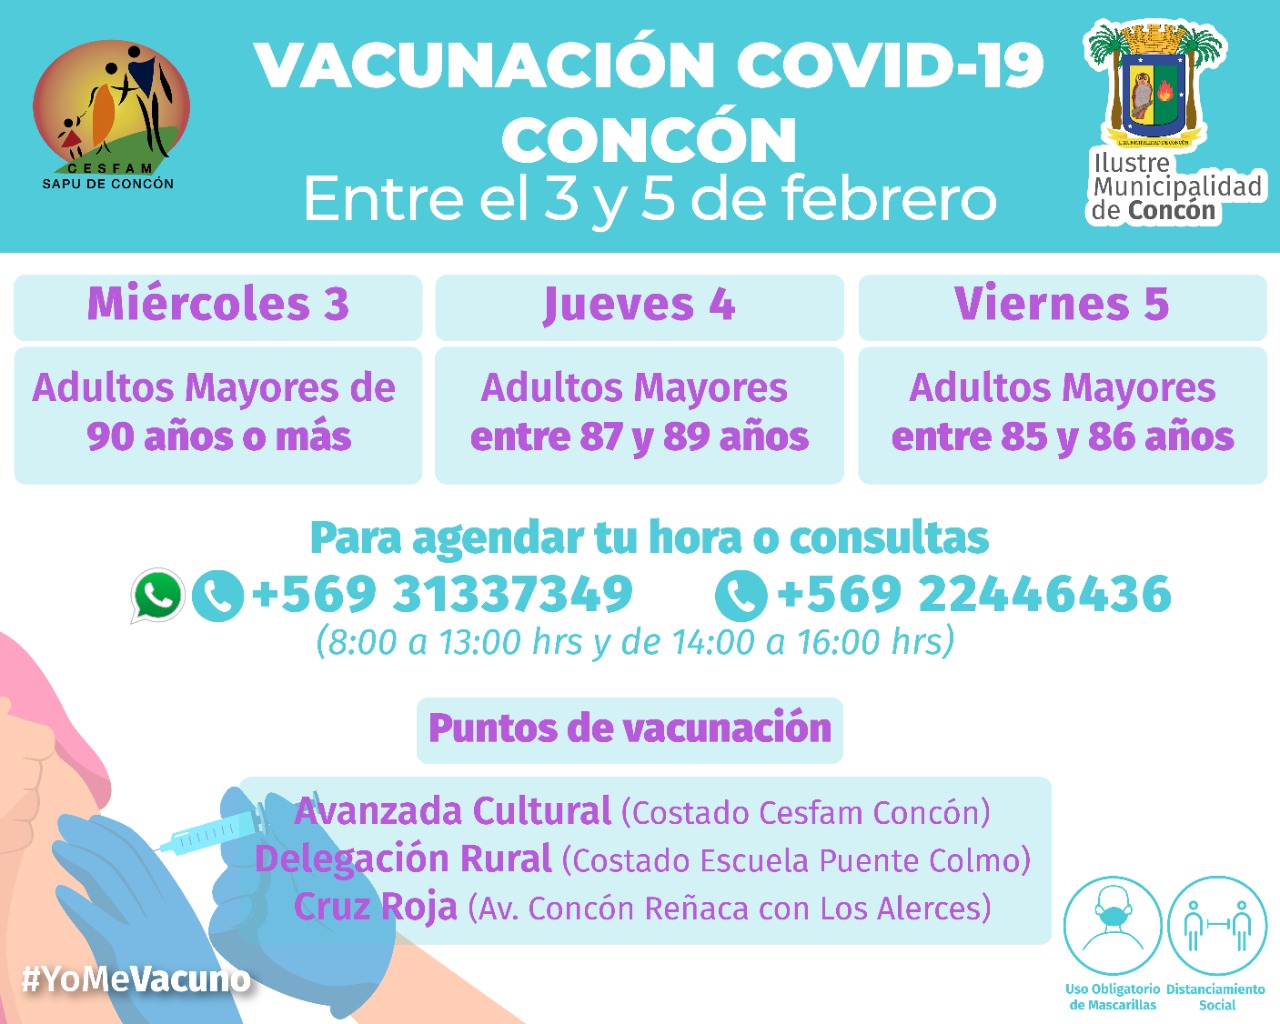 CALENDARIO DE VACUNACIÓN COVID-19 CONCÓN